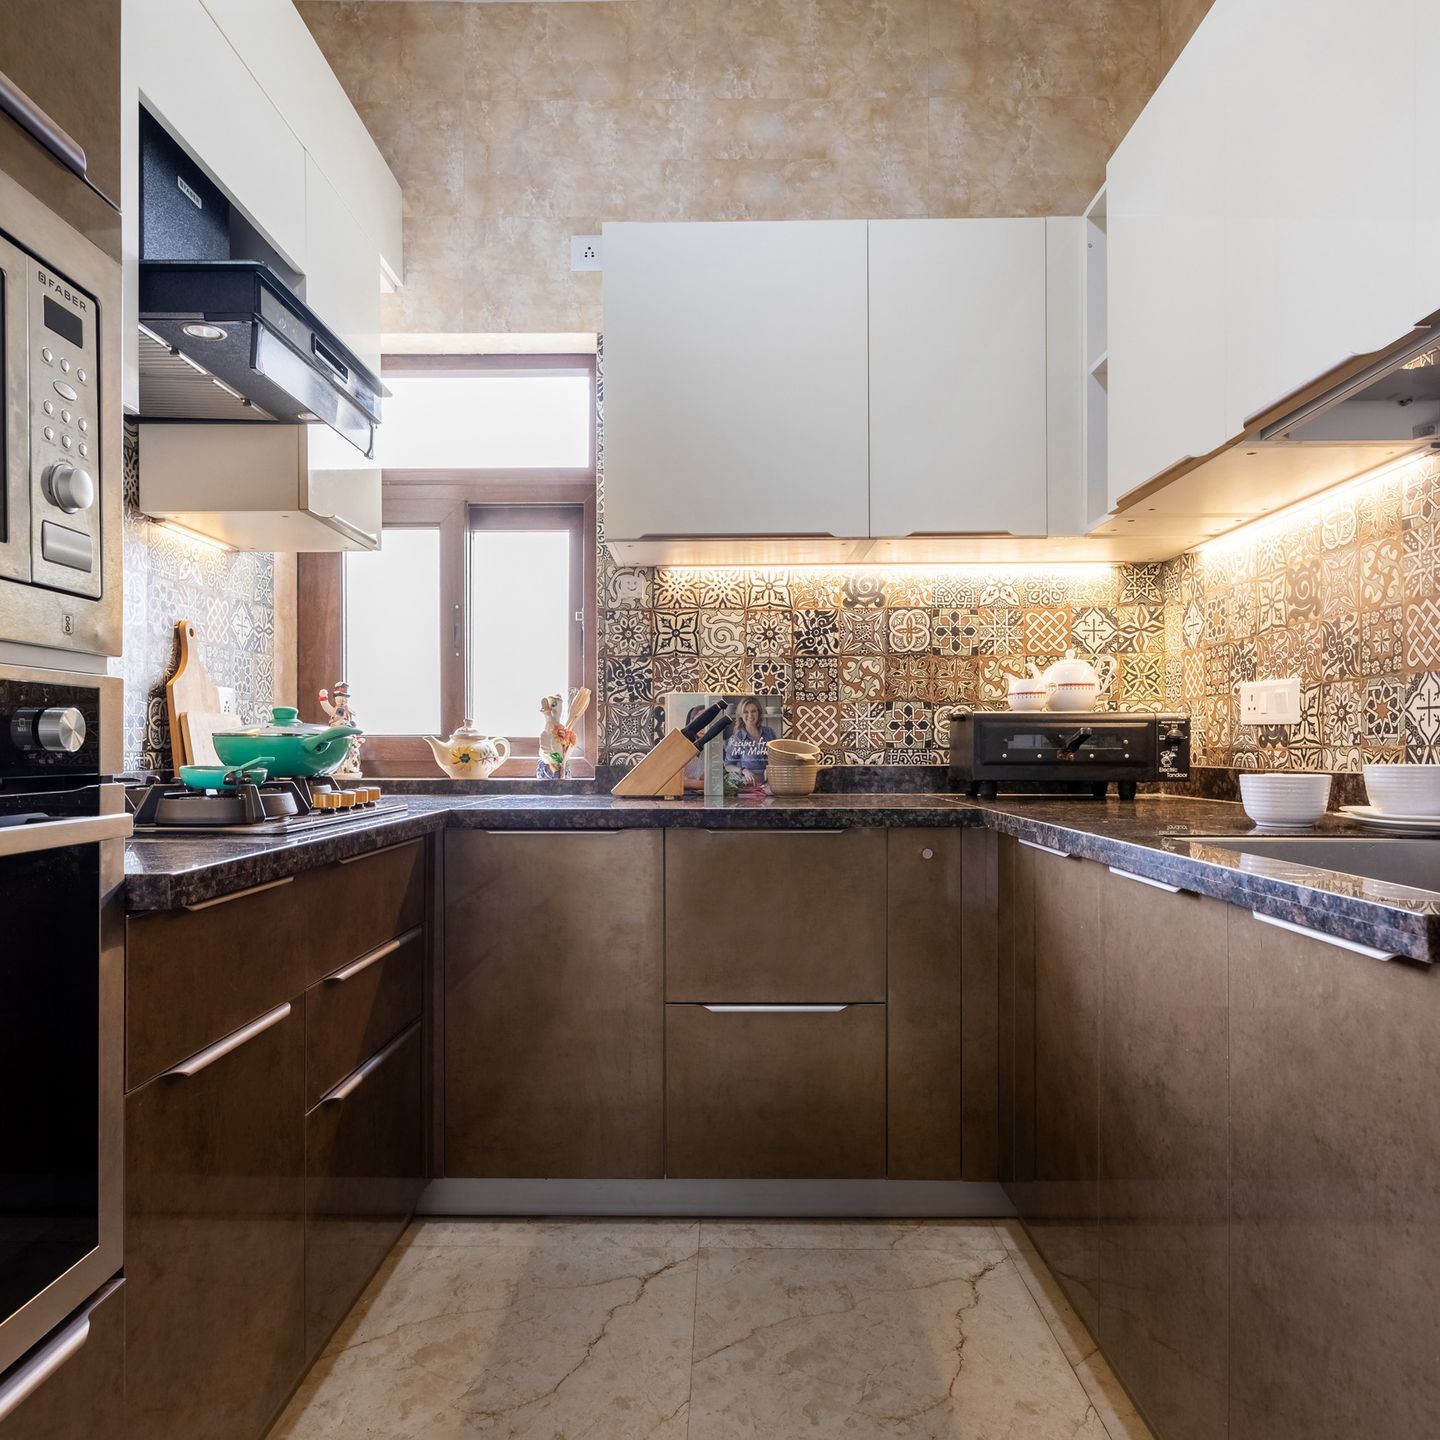 U-Shaped Brown And White Kitchen With Moroccan Backsplash - Livspace